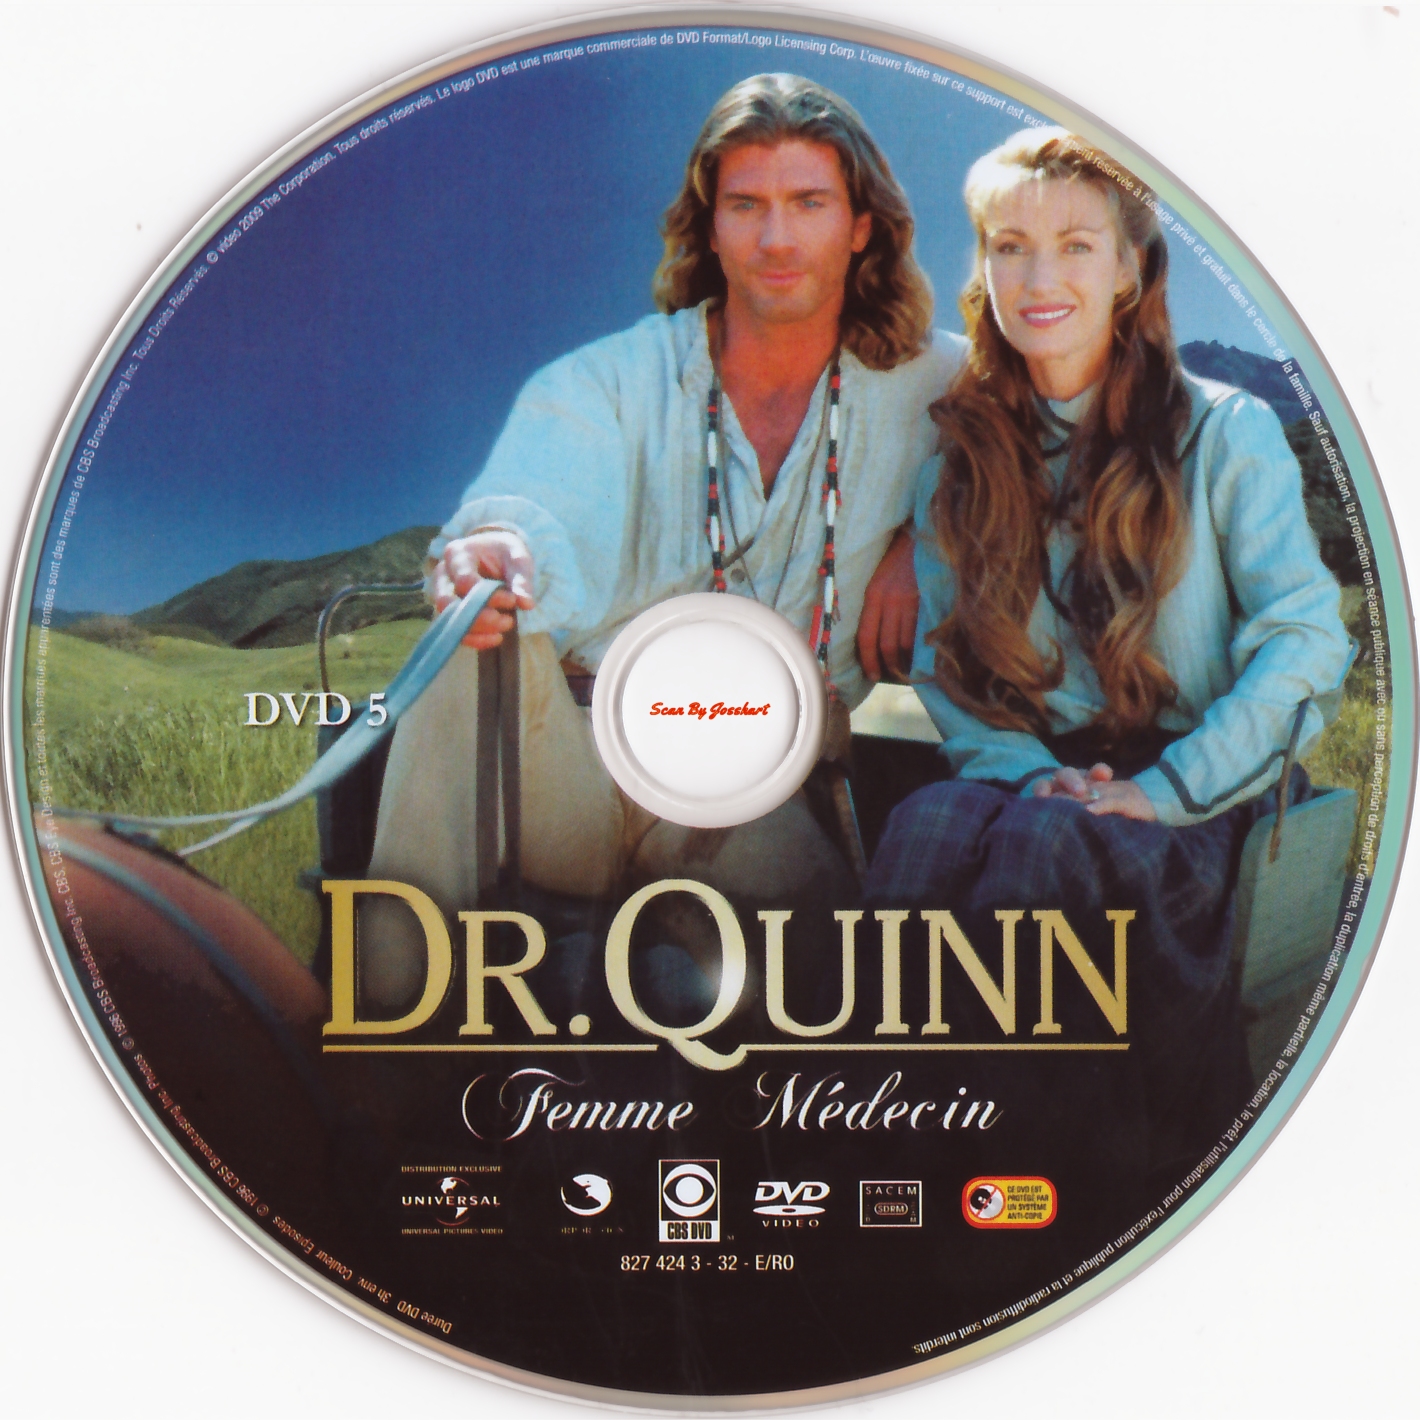 Docteur Quinn femme mdecin - Integrale Saison 4 DISC 5